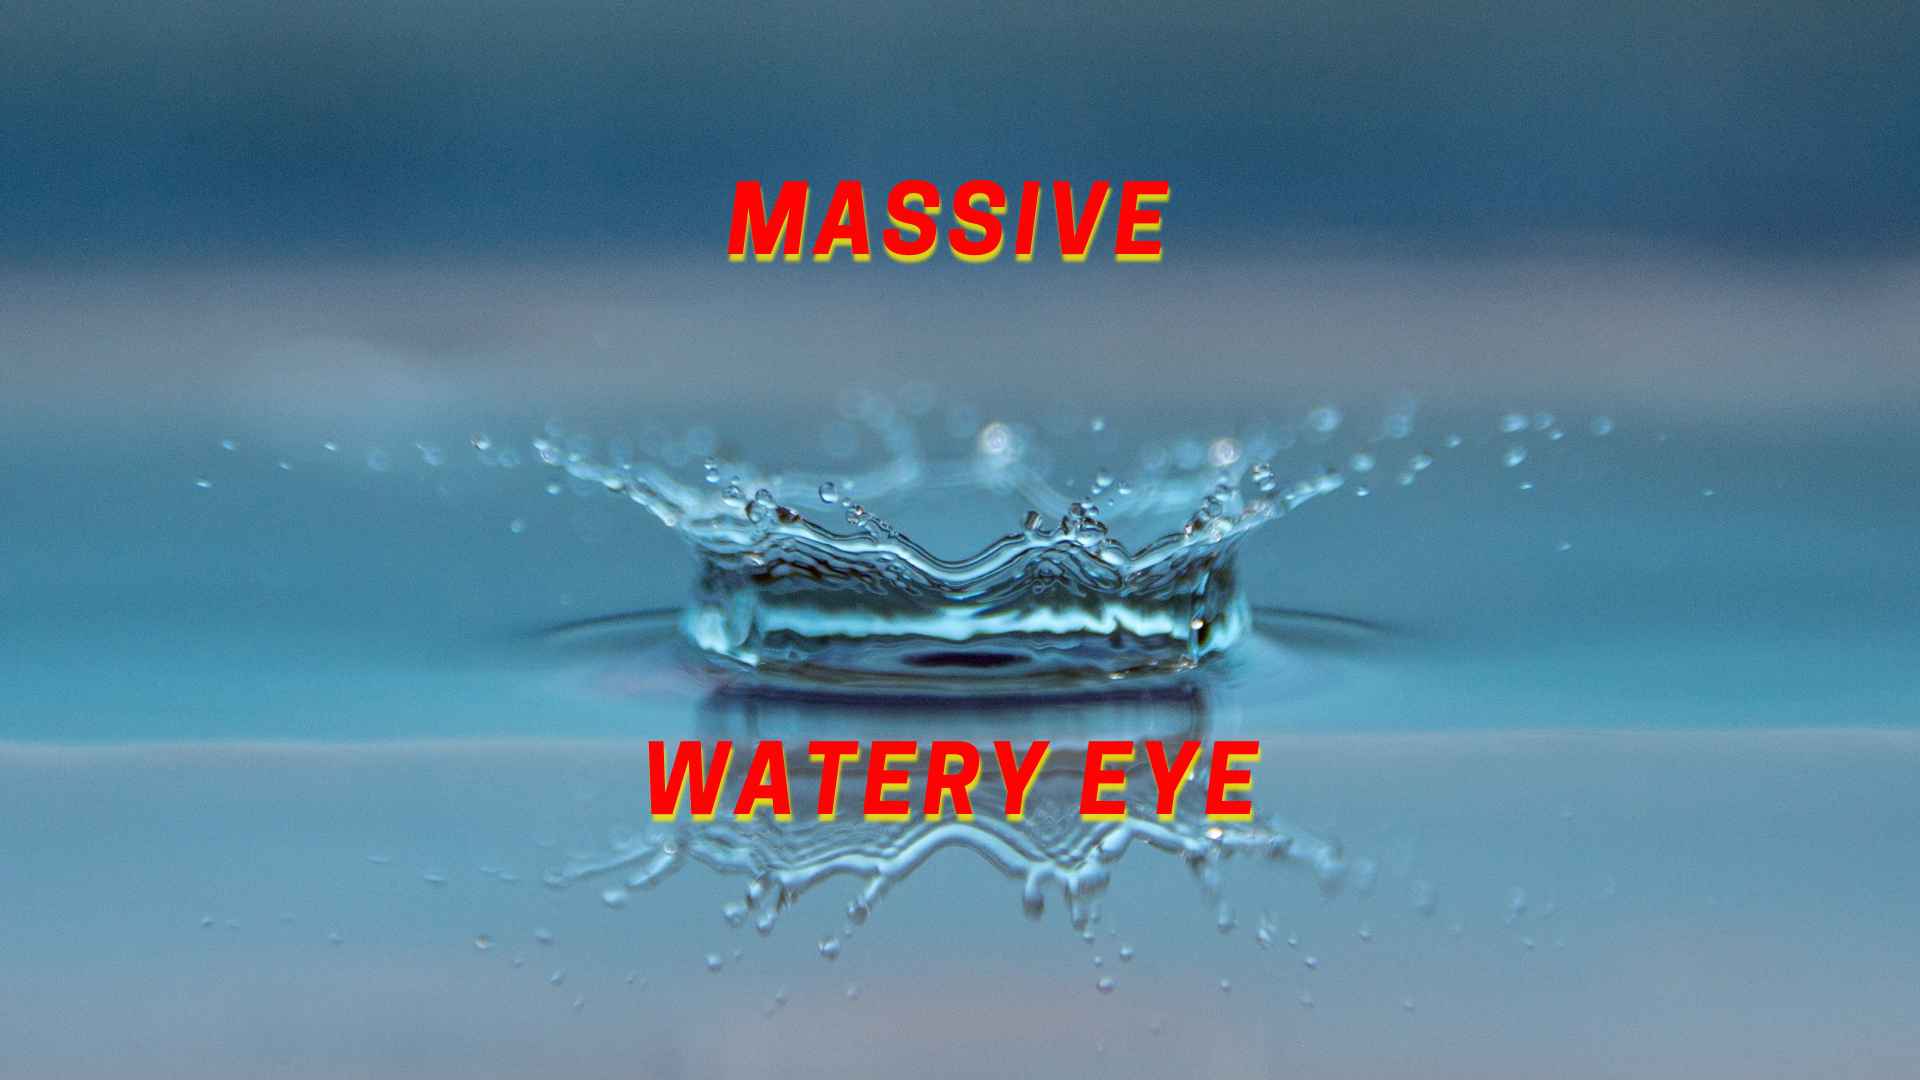 Massive watery eye